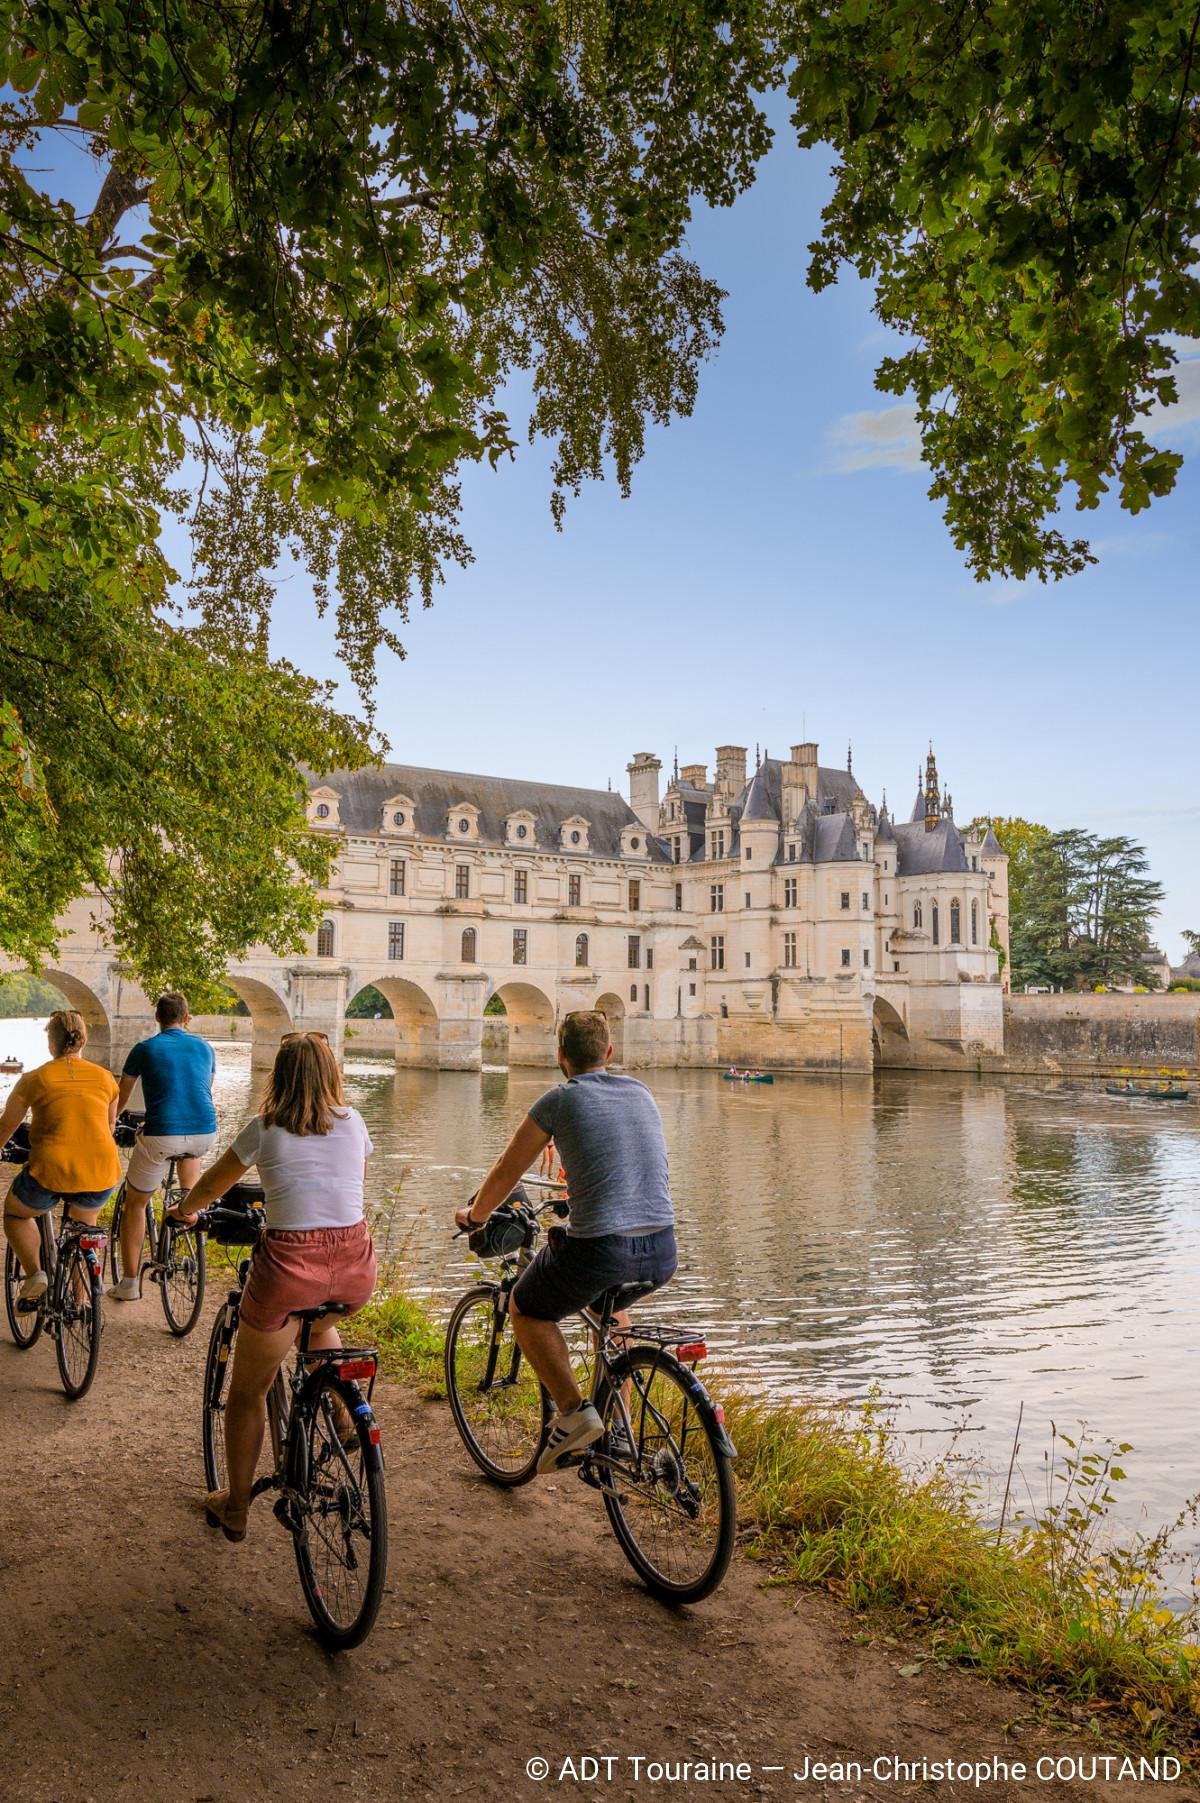 Le Manoir Les Minimes | Hotel Loire Valley by bike